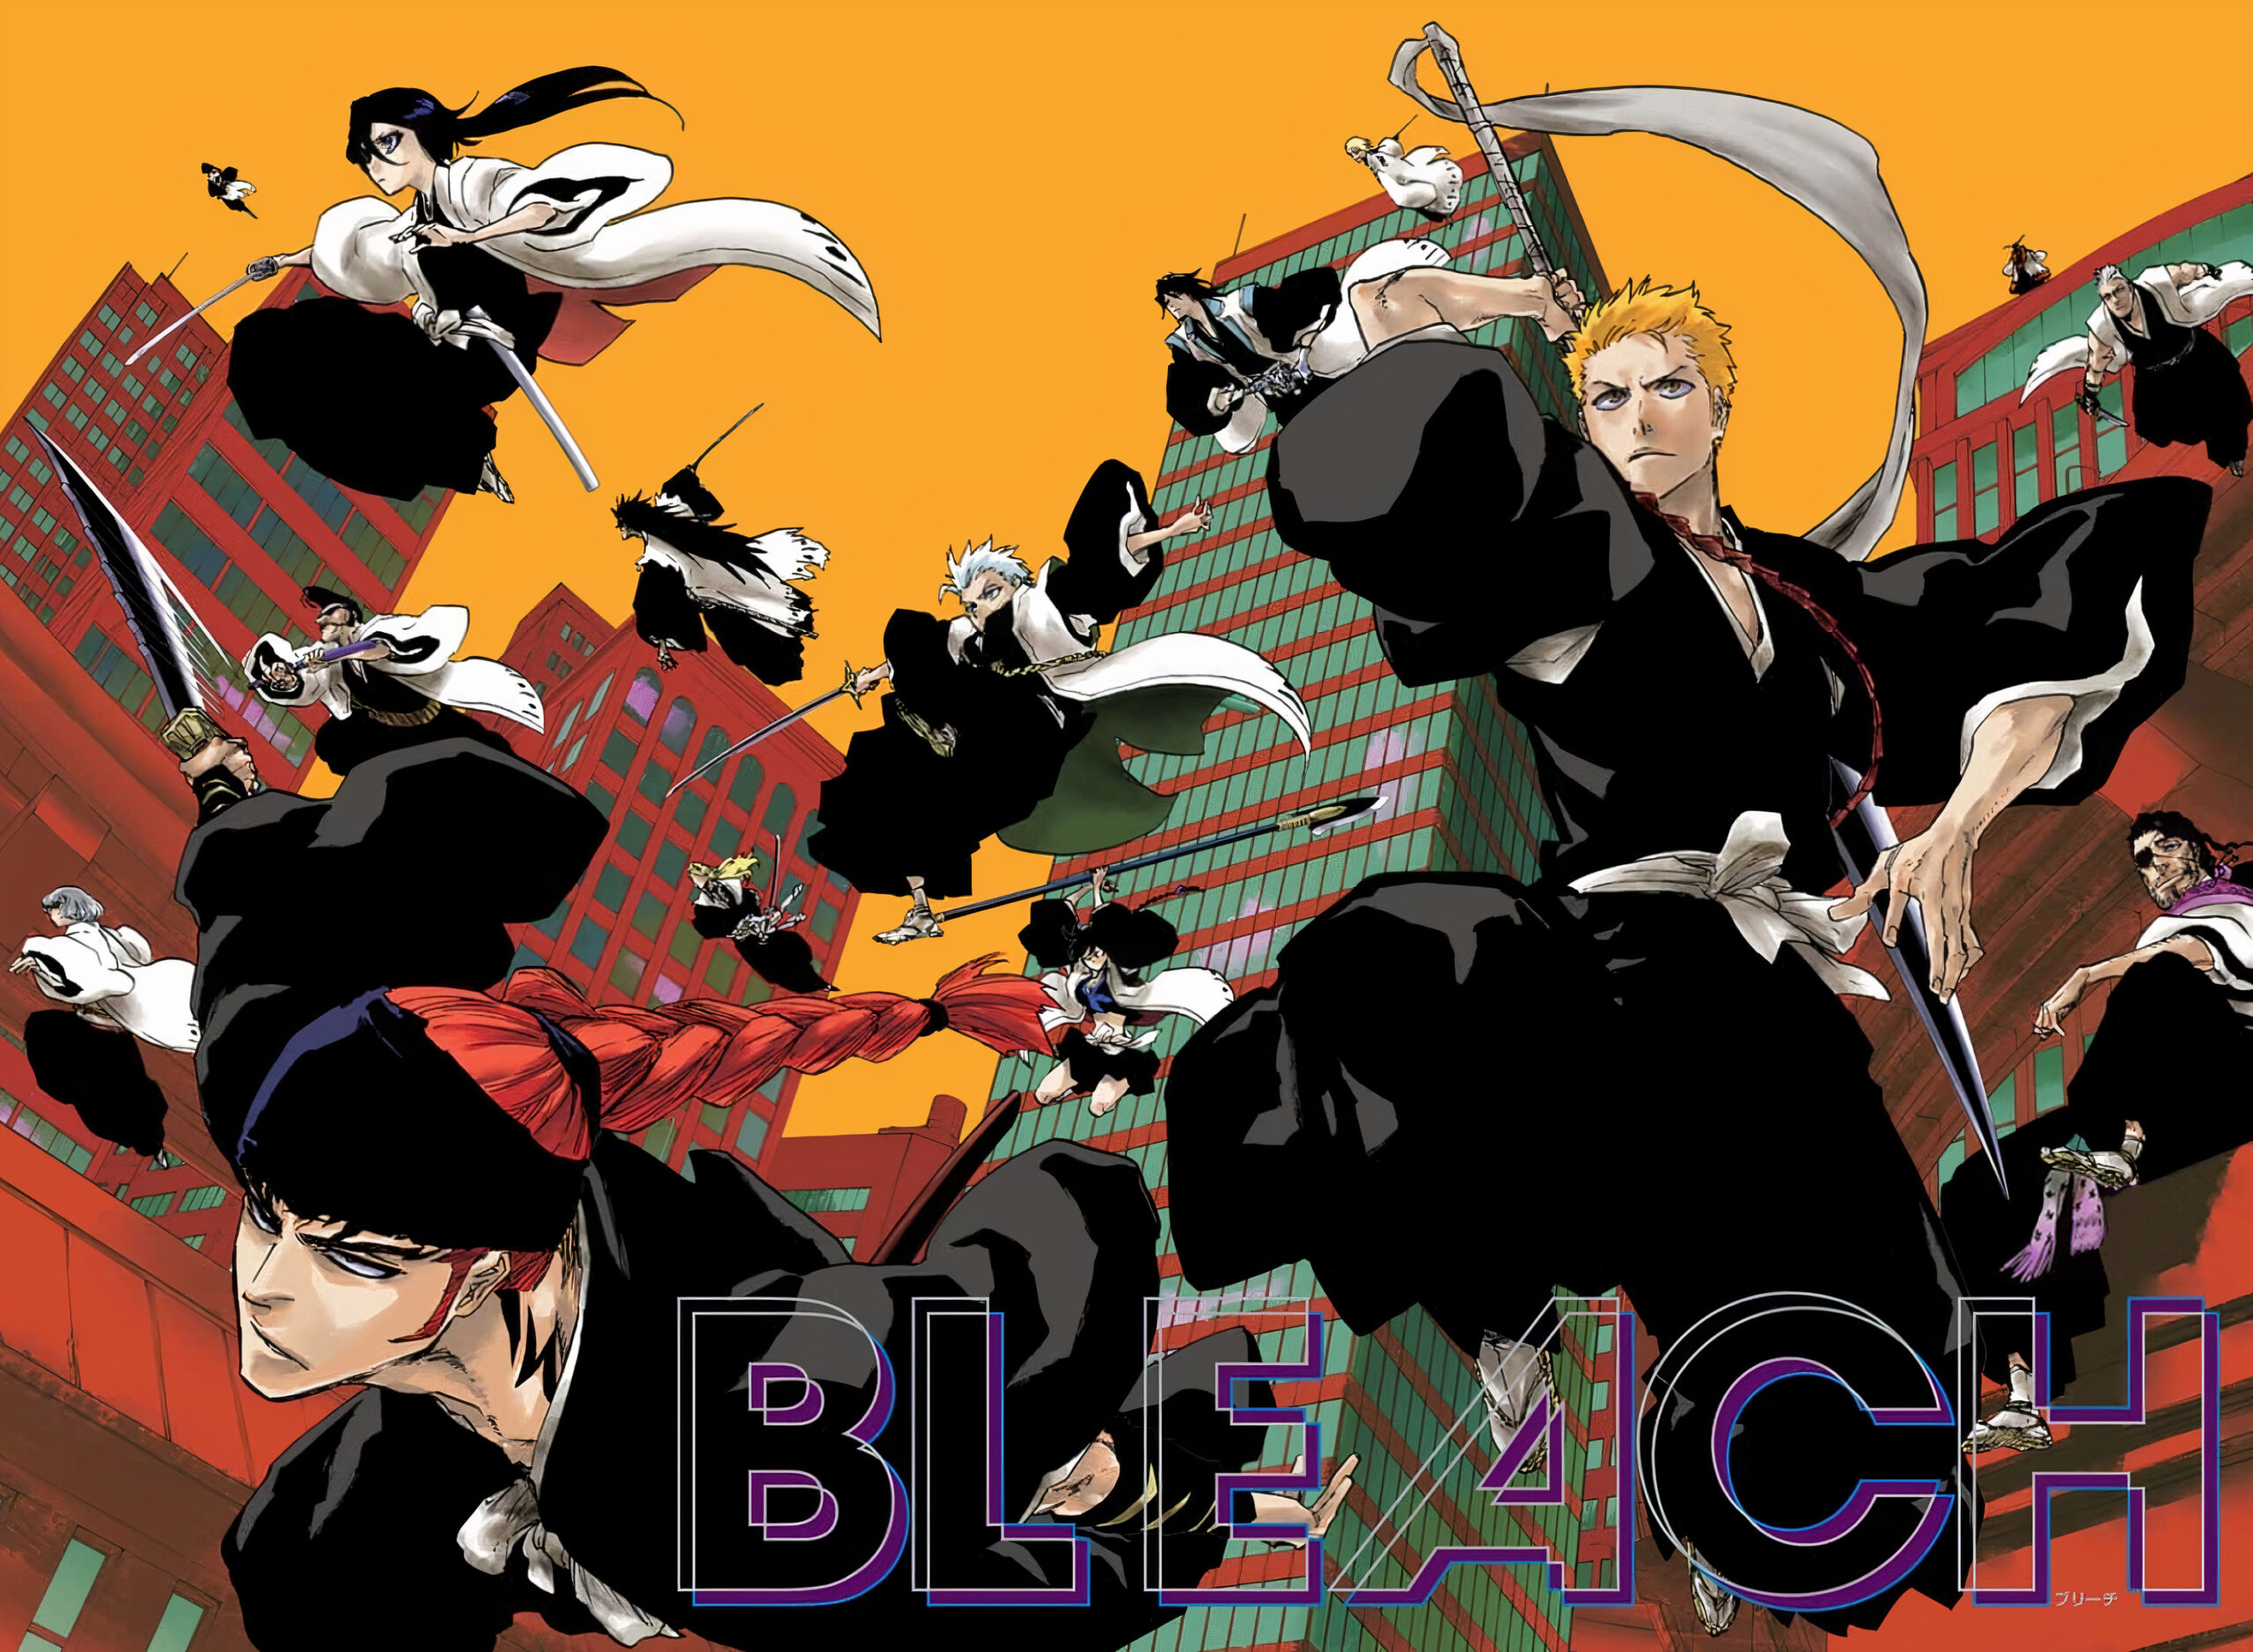 Kubo, Tite. Bleach (2021). Shonen Jump.
Bleach 20th anniversary one-shot key visual.